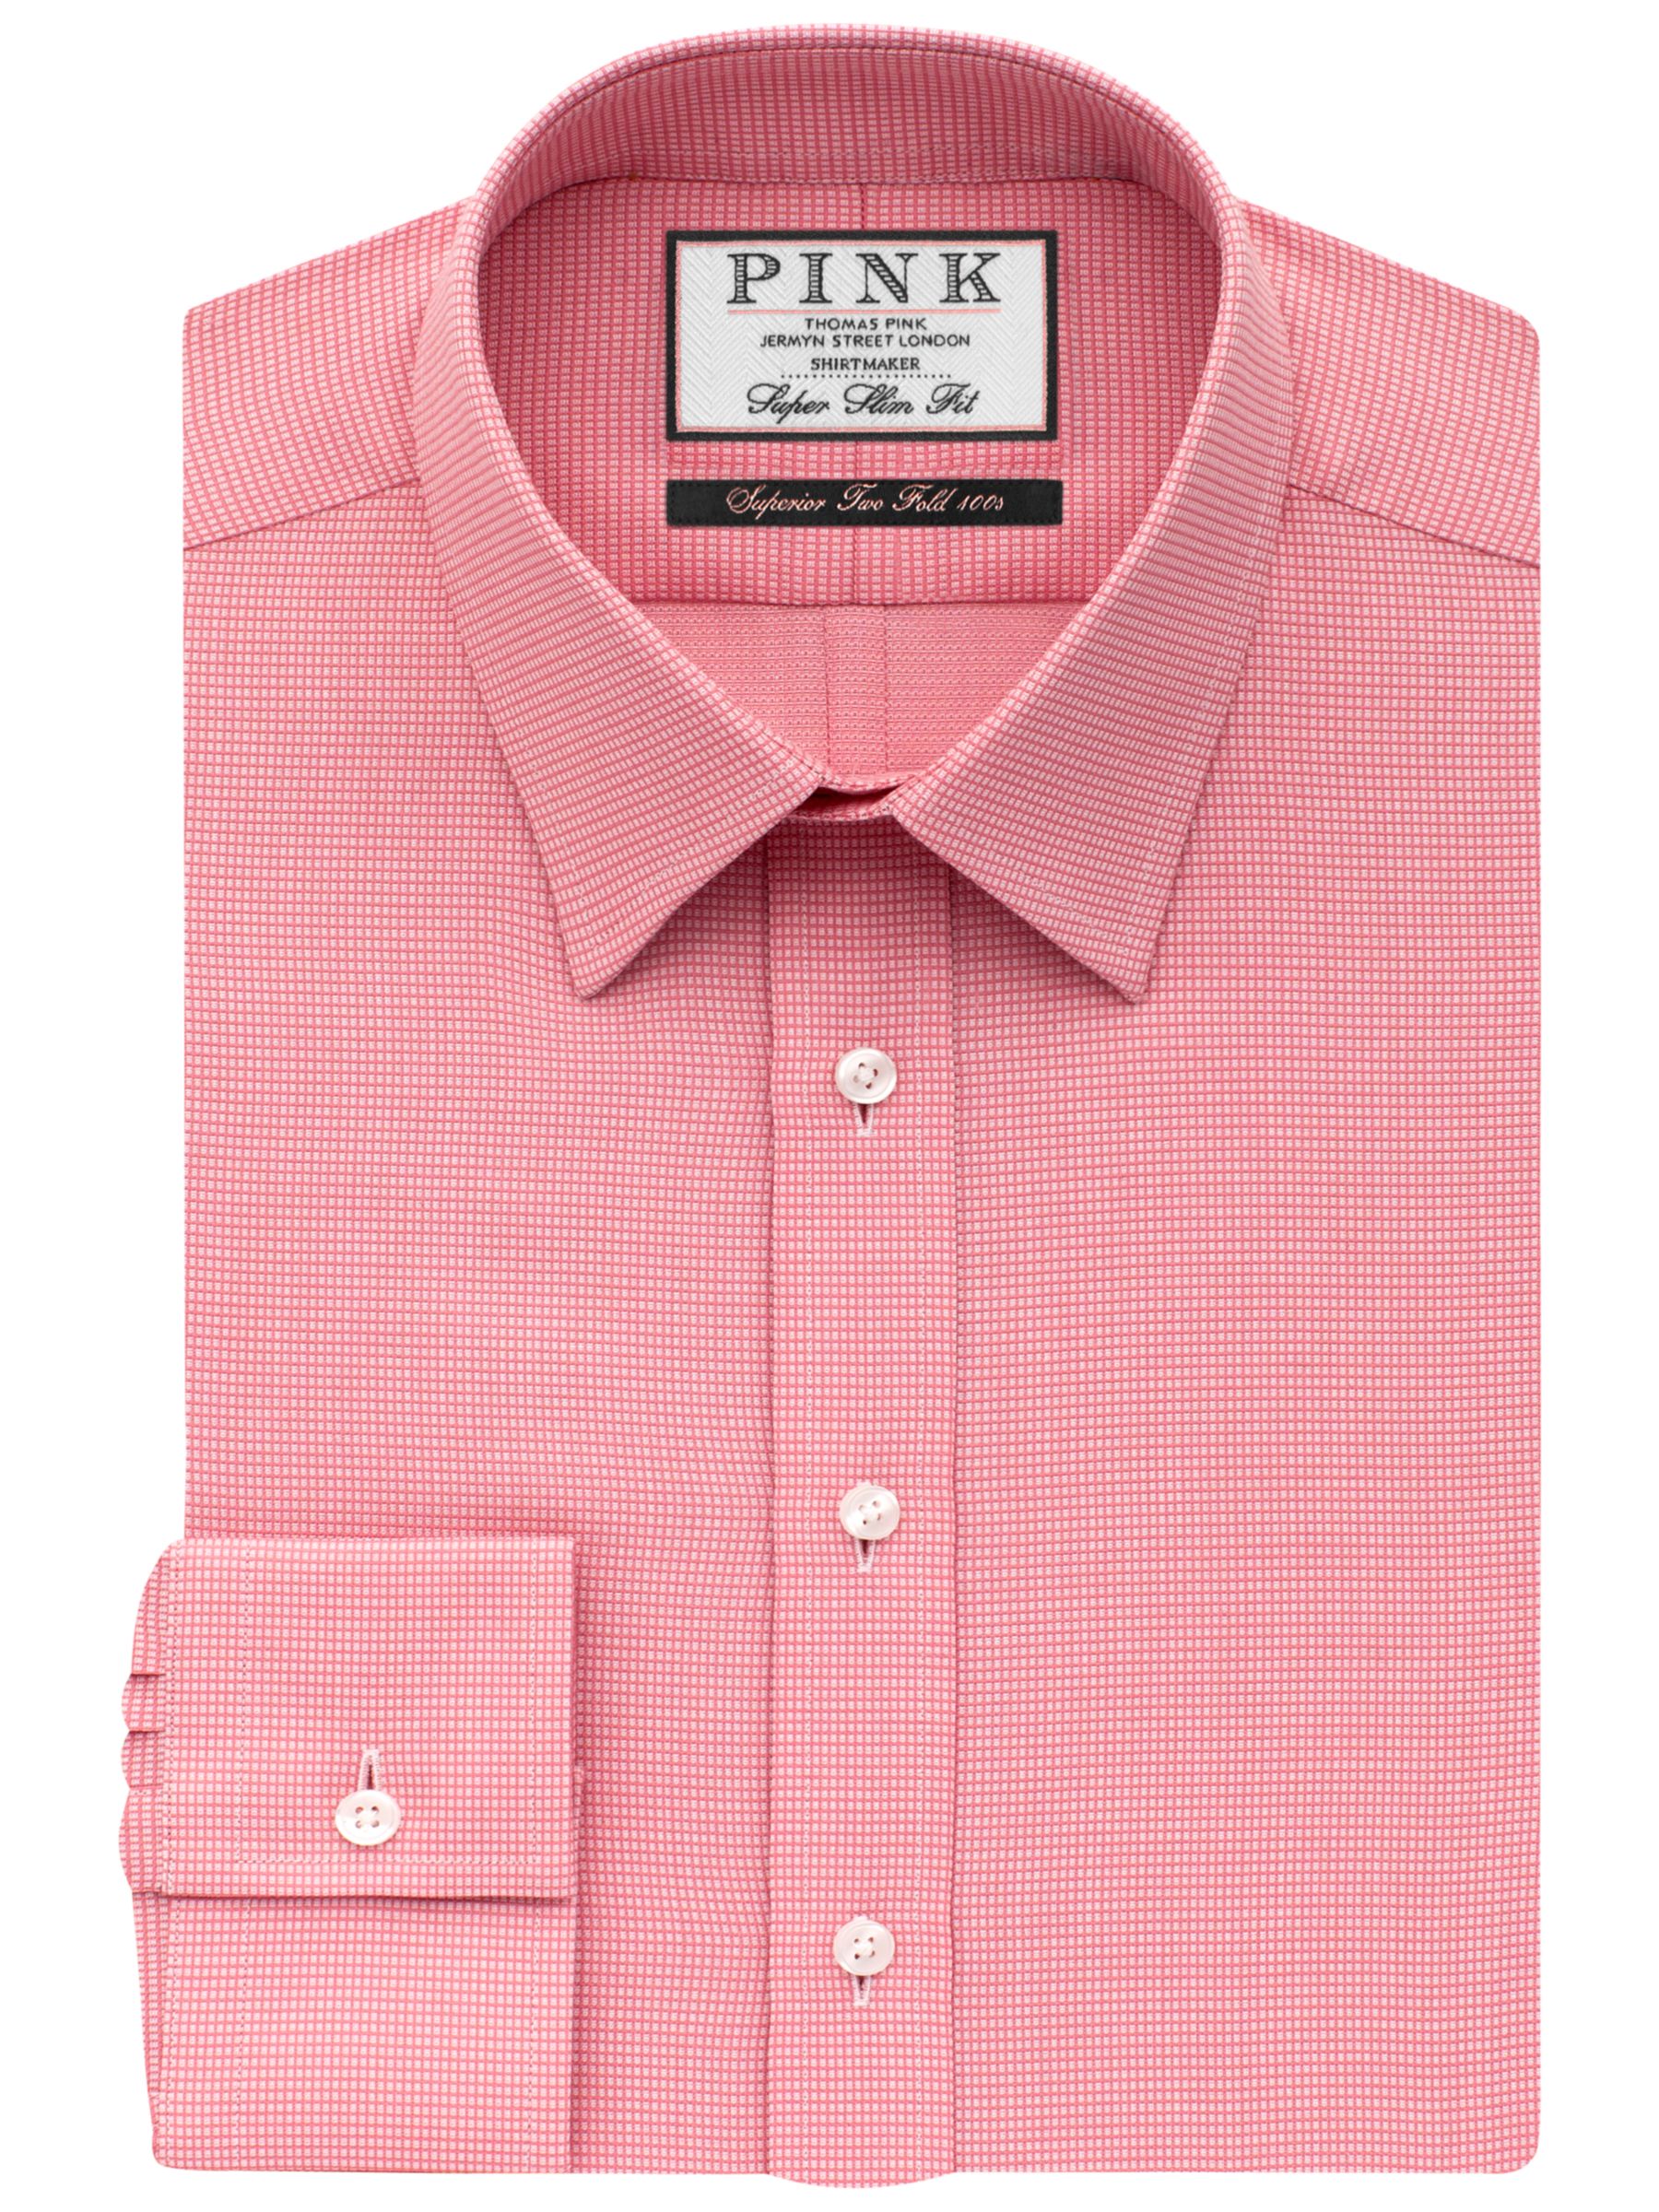 Thomas Pink Hartley Textured Super Slim Fit Shirt, Pink/White, 18